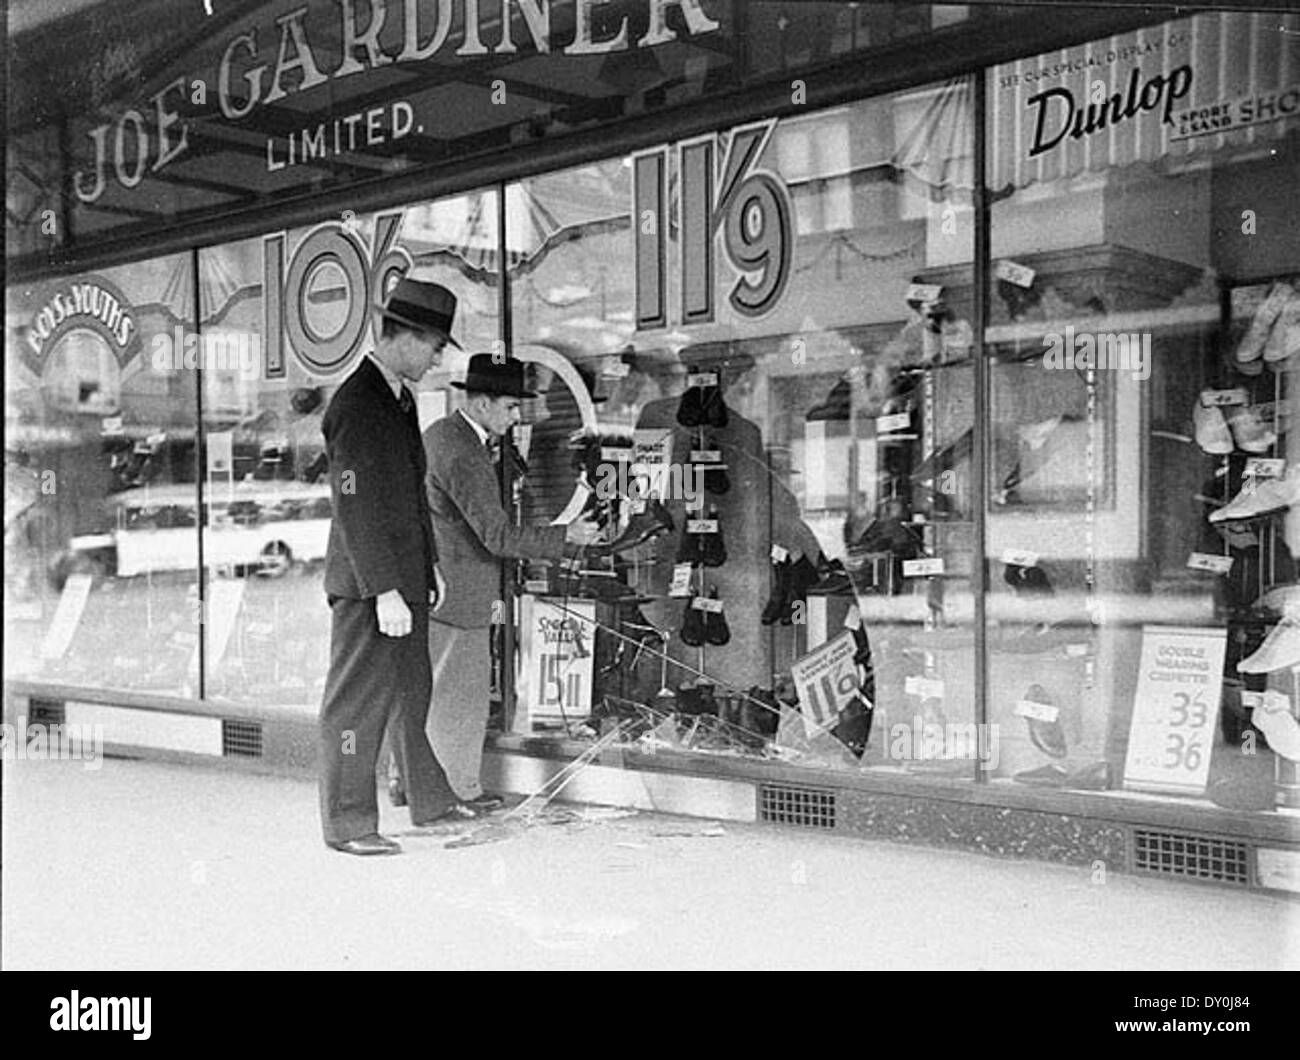 Shop window of Joe Gardiner's Shoe Store smashed in George Street, Sydney, c. 1934, by Sam Hood Stock Photo